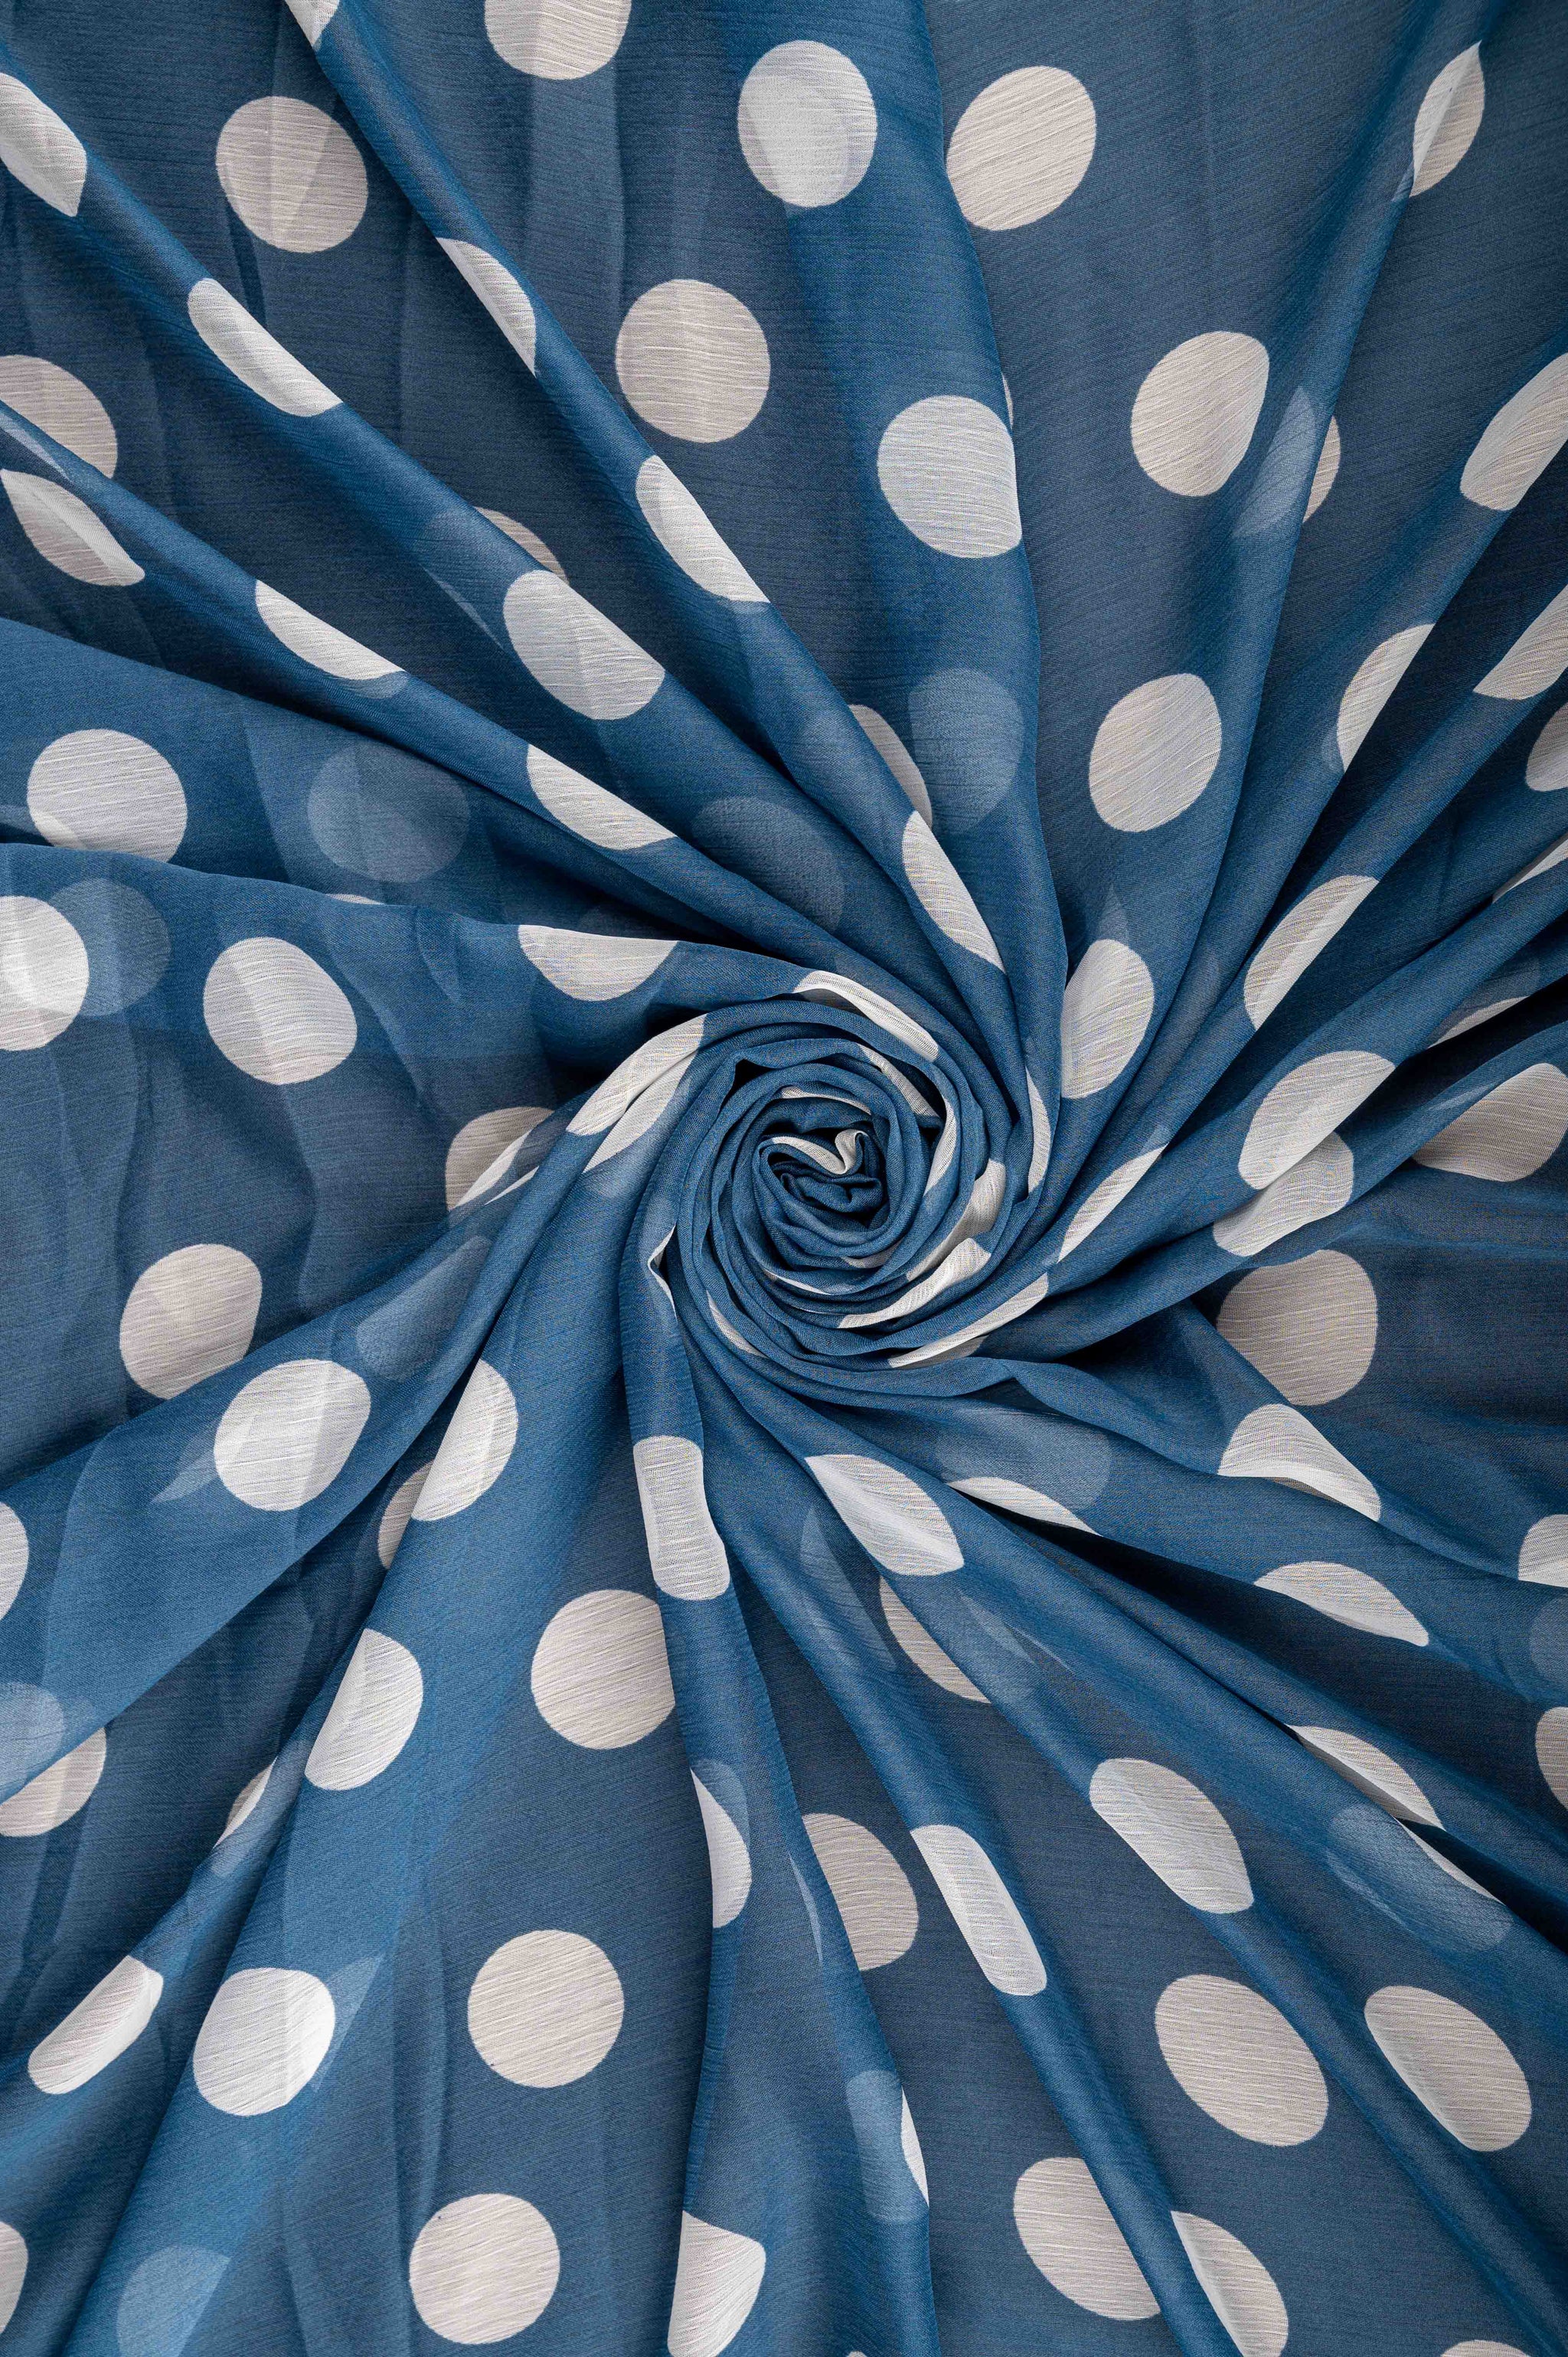 Indigo Blue And White Polka Dots Big Width Chiffon Fabric